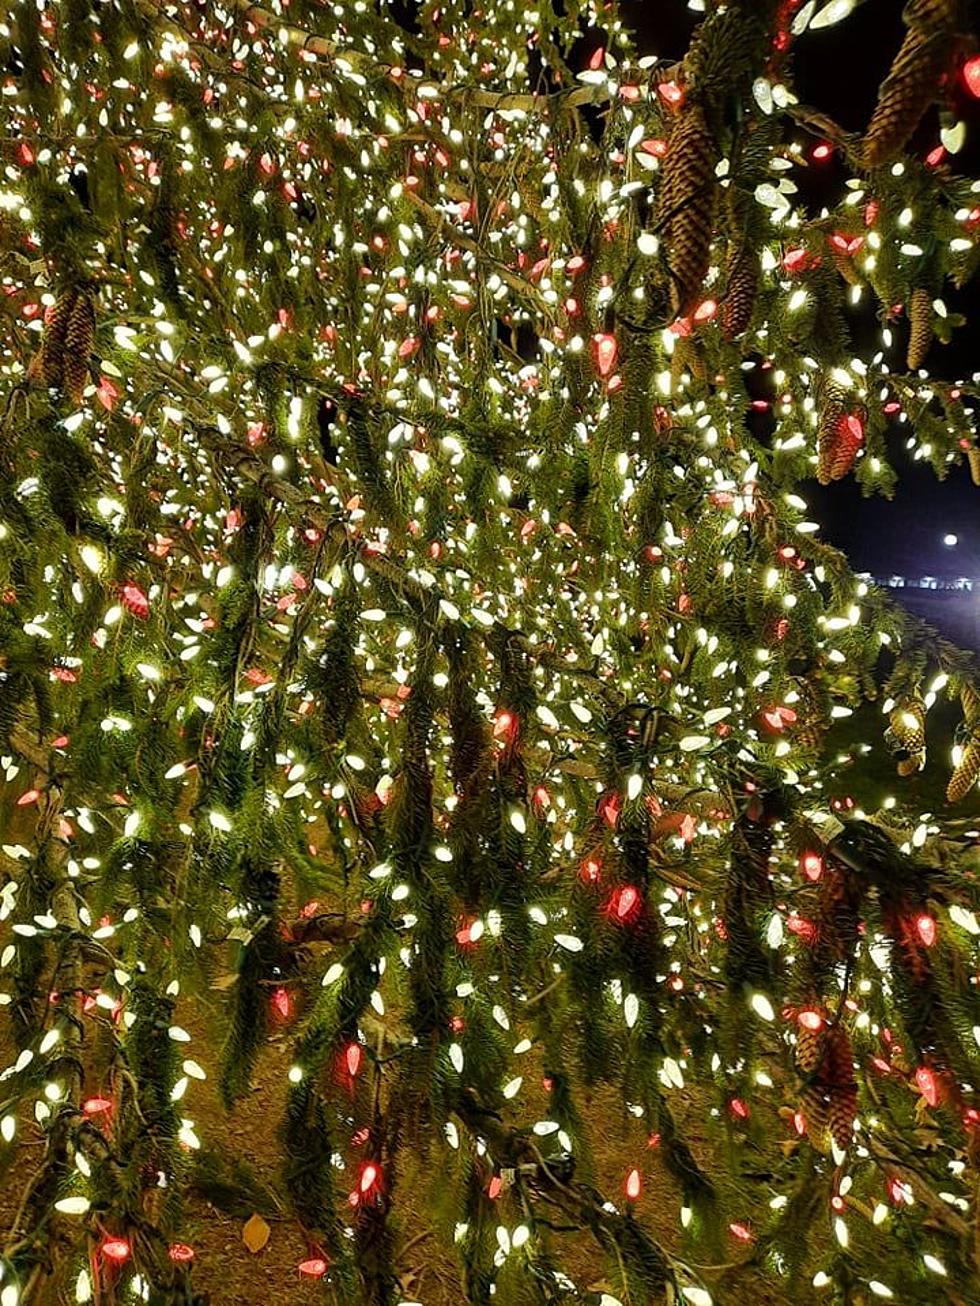 Poughkeepsie Christmas Tree Has 55% More Lights Than Rockefeller